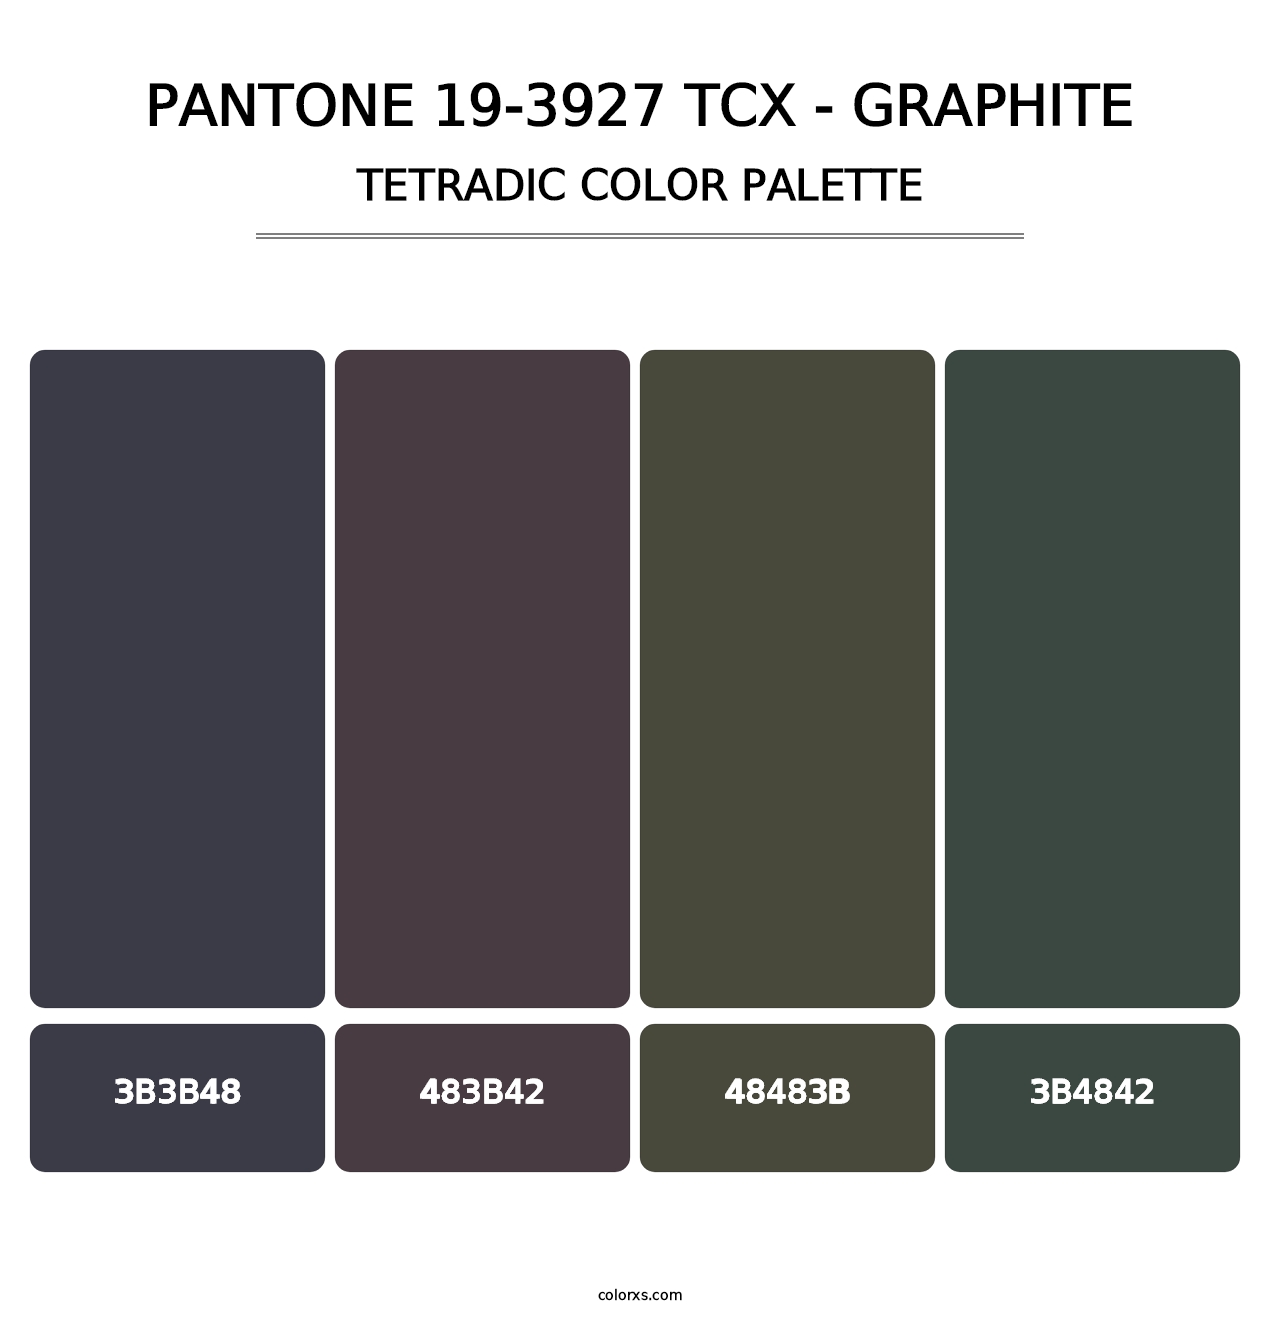 PANTONE 19-3927 TCX - Graphite - Tetradic Color Palette